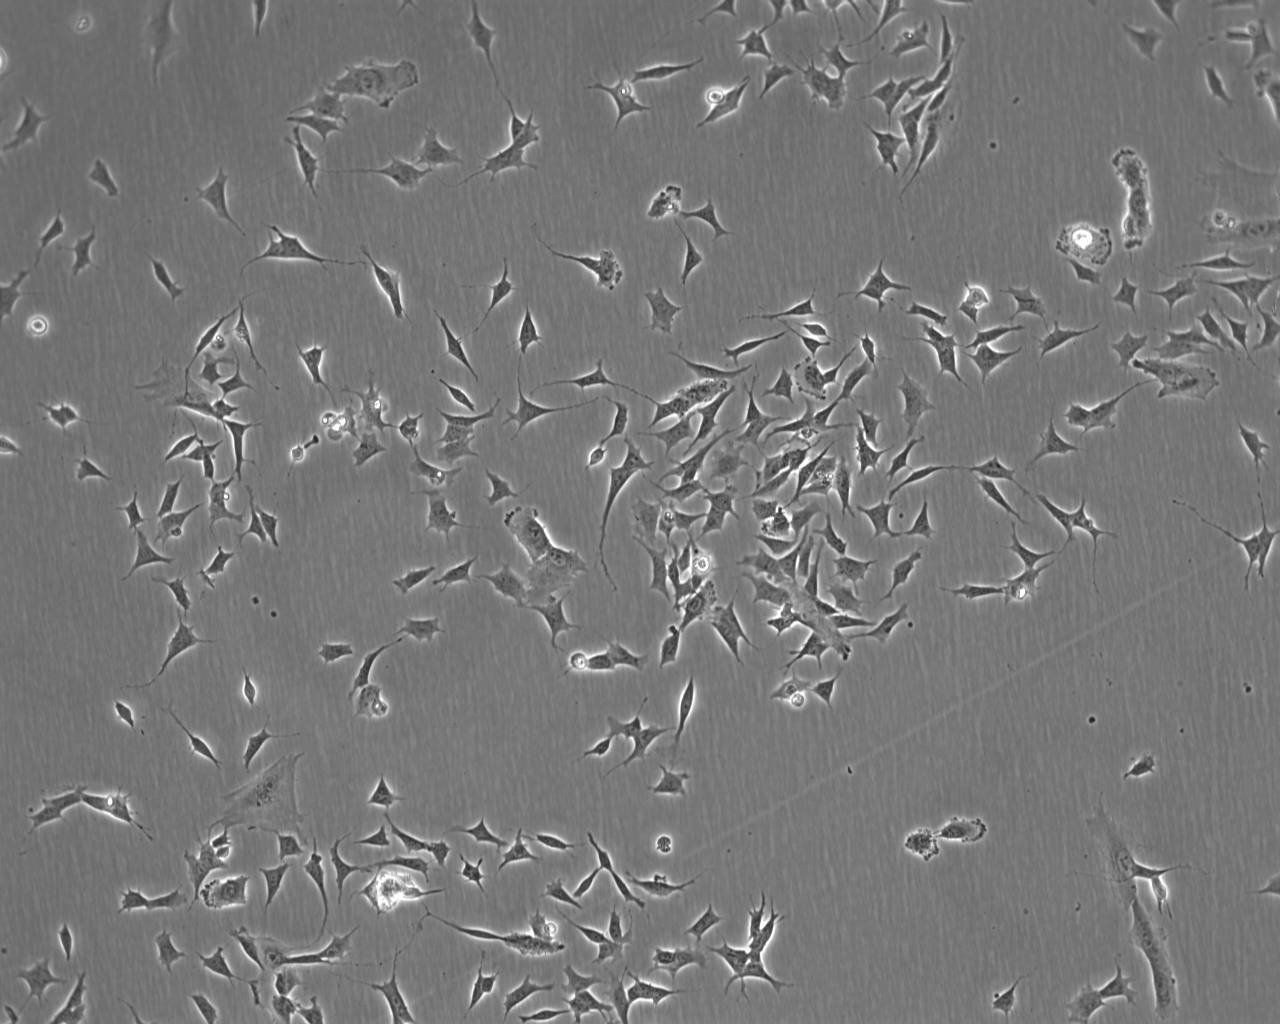 HCT 116 Epithelial Cell|人结肠癌传代细胞(有STR鉴定)